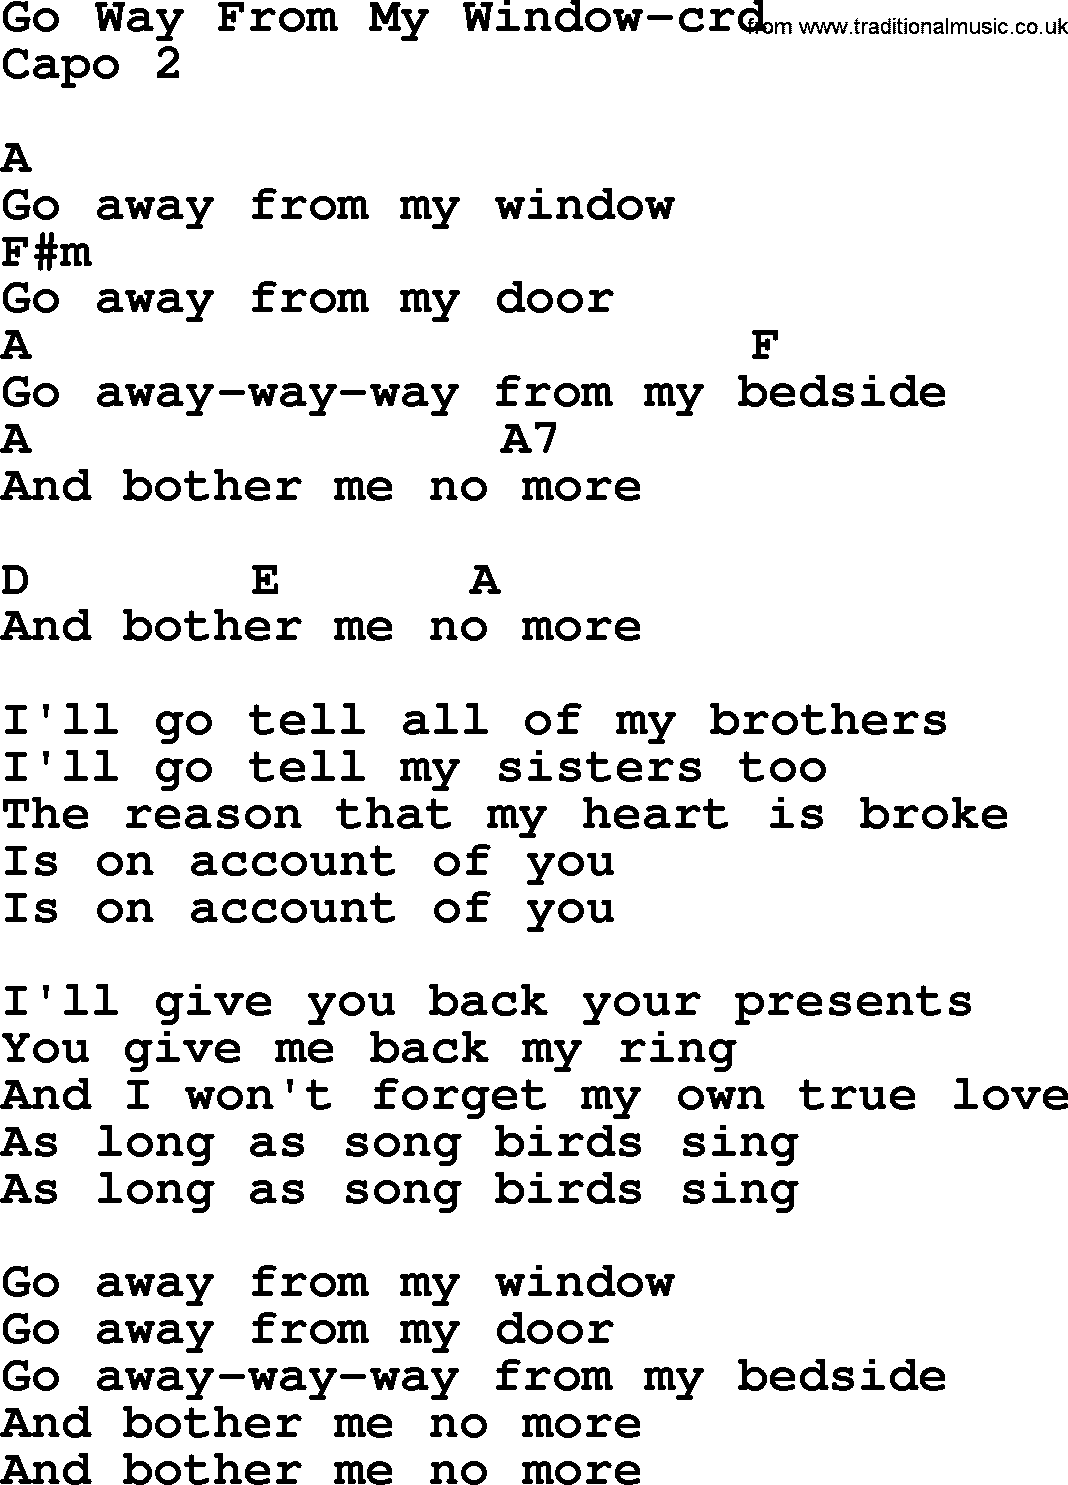 Joan Baez song Go Way From My Window lyrics and chords